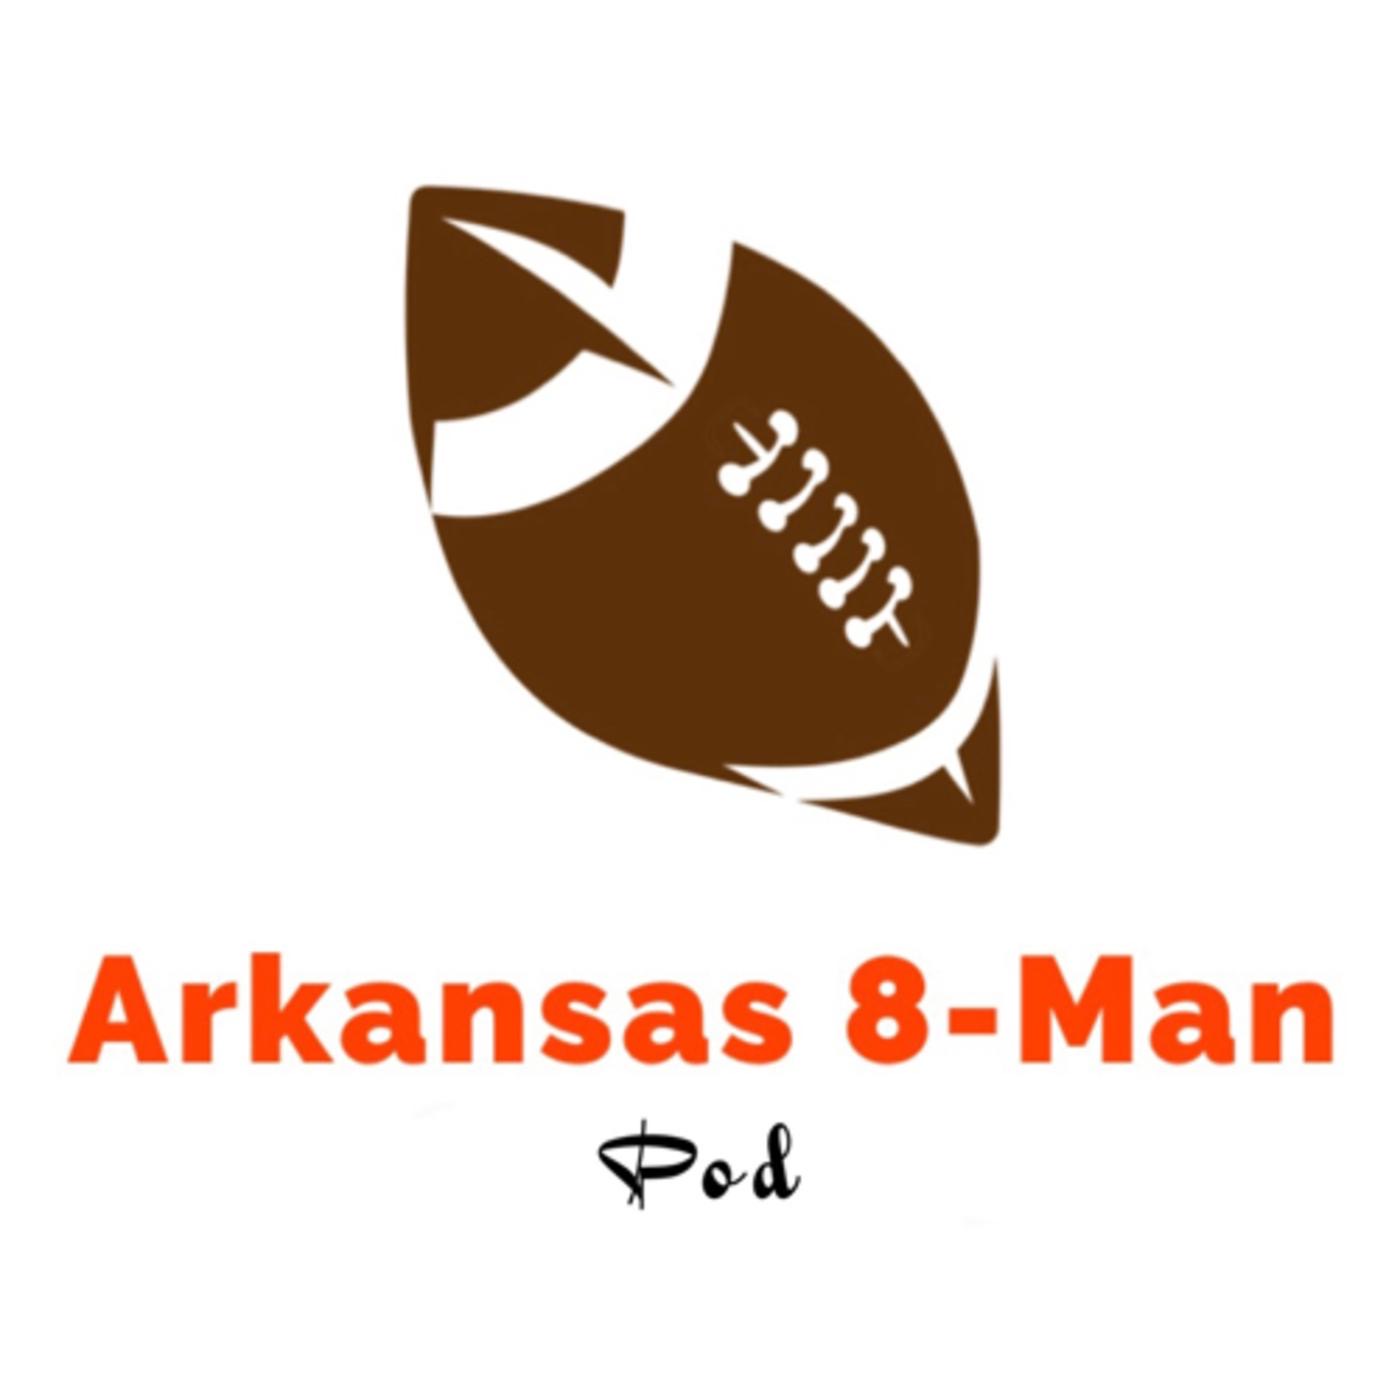 Arkansas 8-Man Pod Episode 11